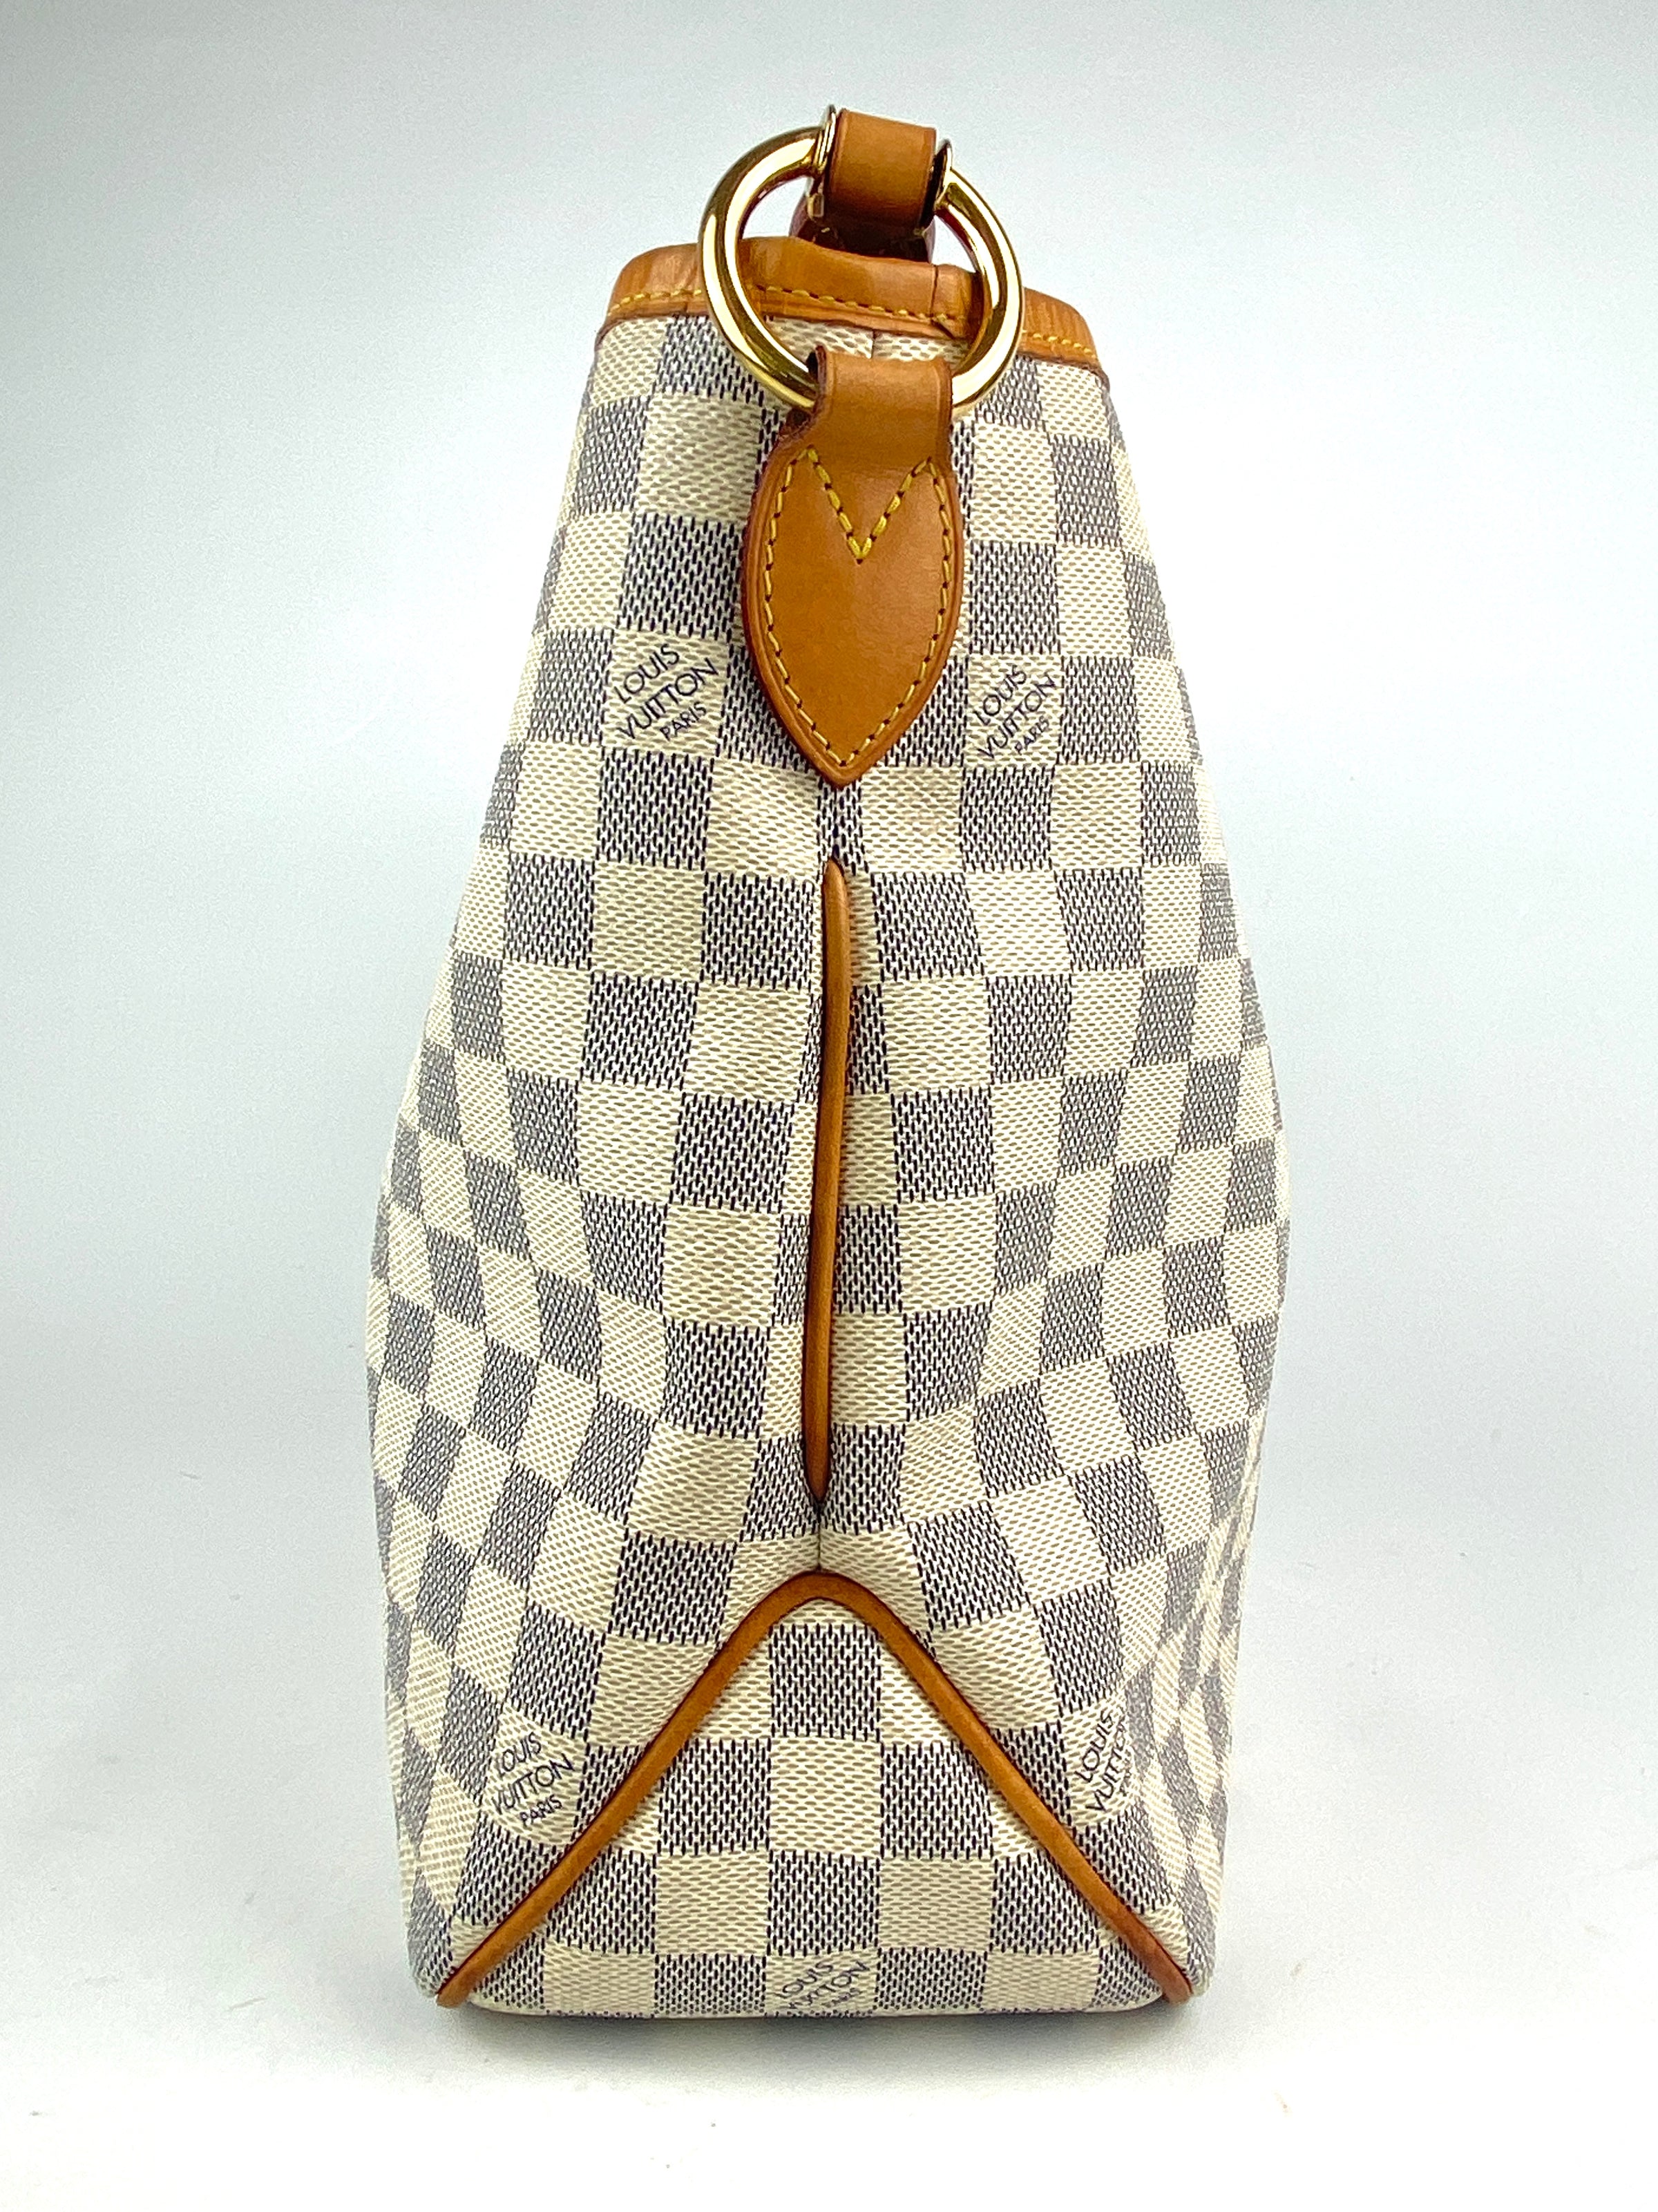 Louis Vuitton Damier Azur Delightful PM N41447 Women's semi-shoulder  bag MI2125